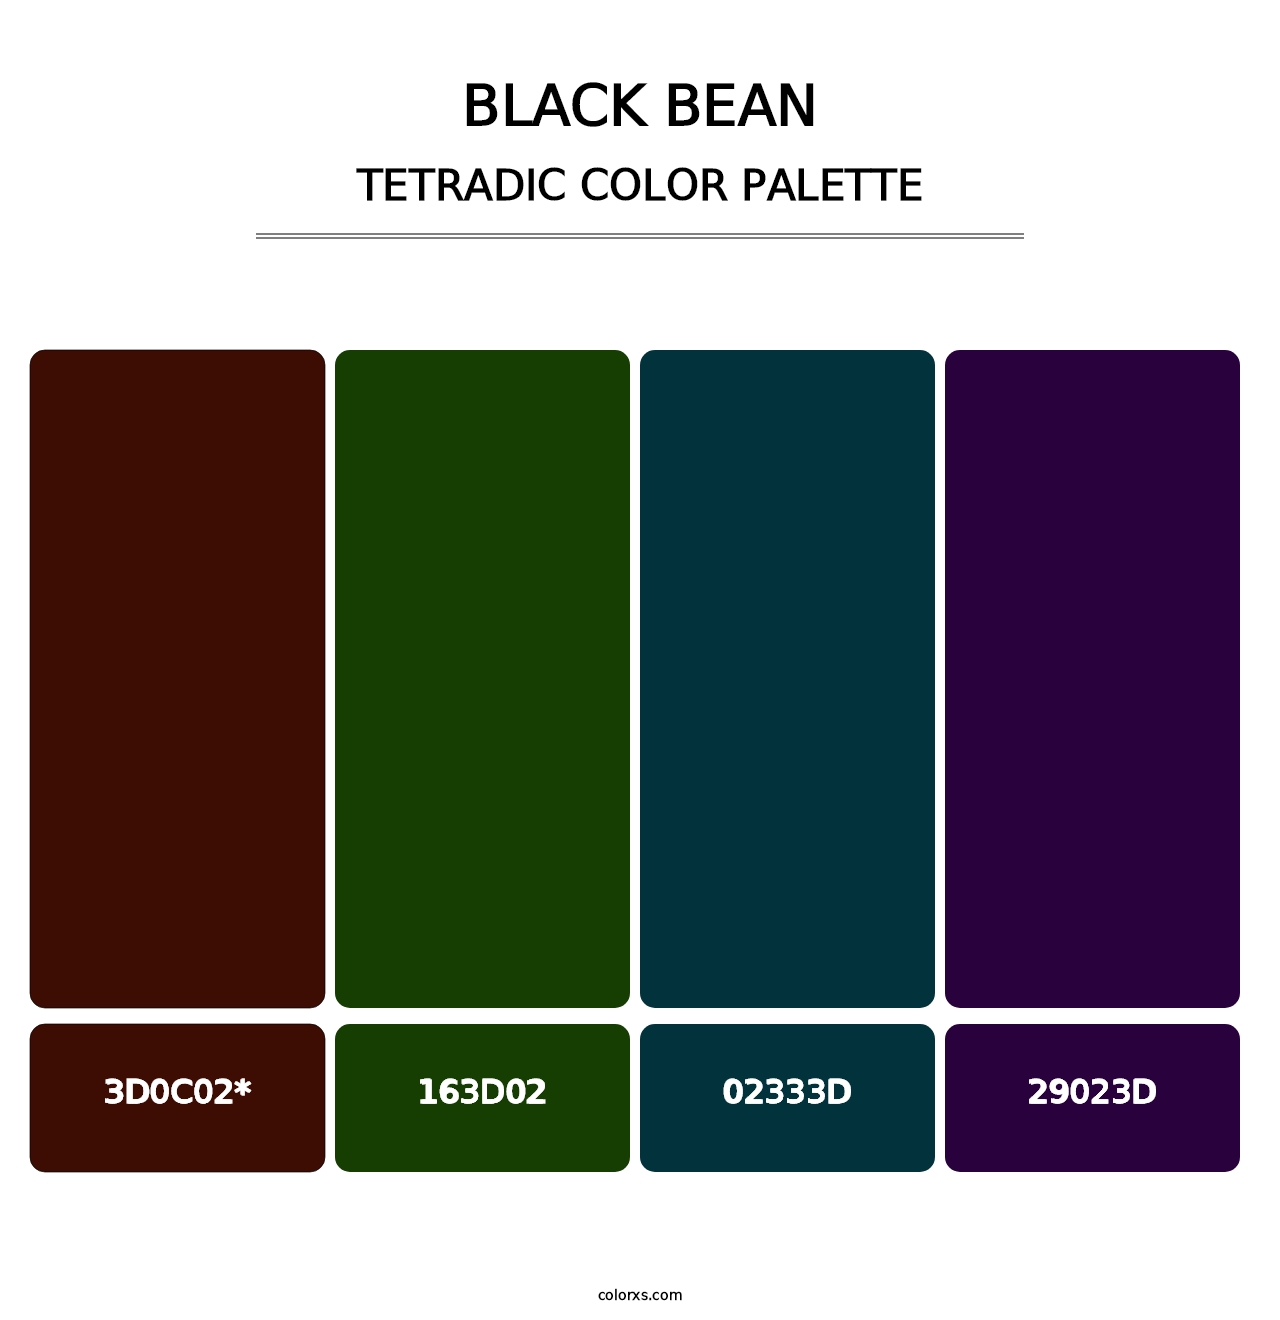 Black Bean - Tetradic Color Palette